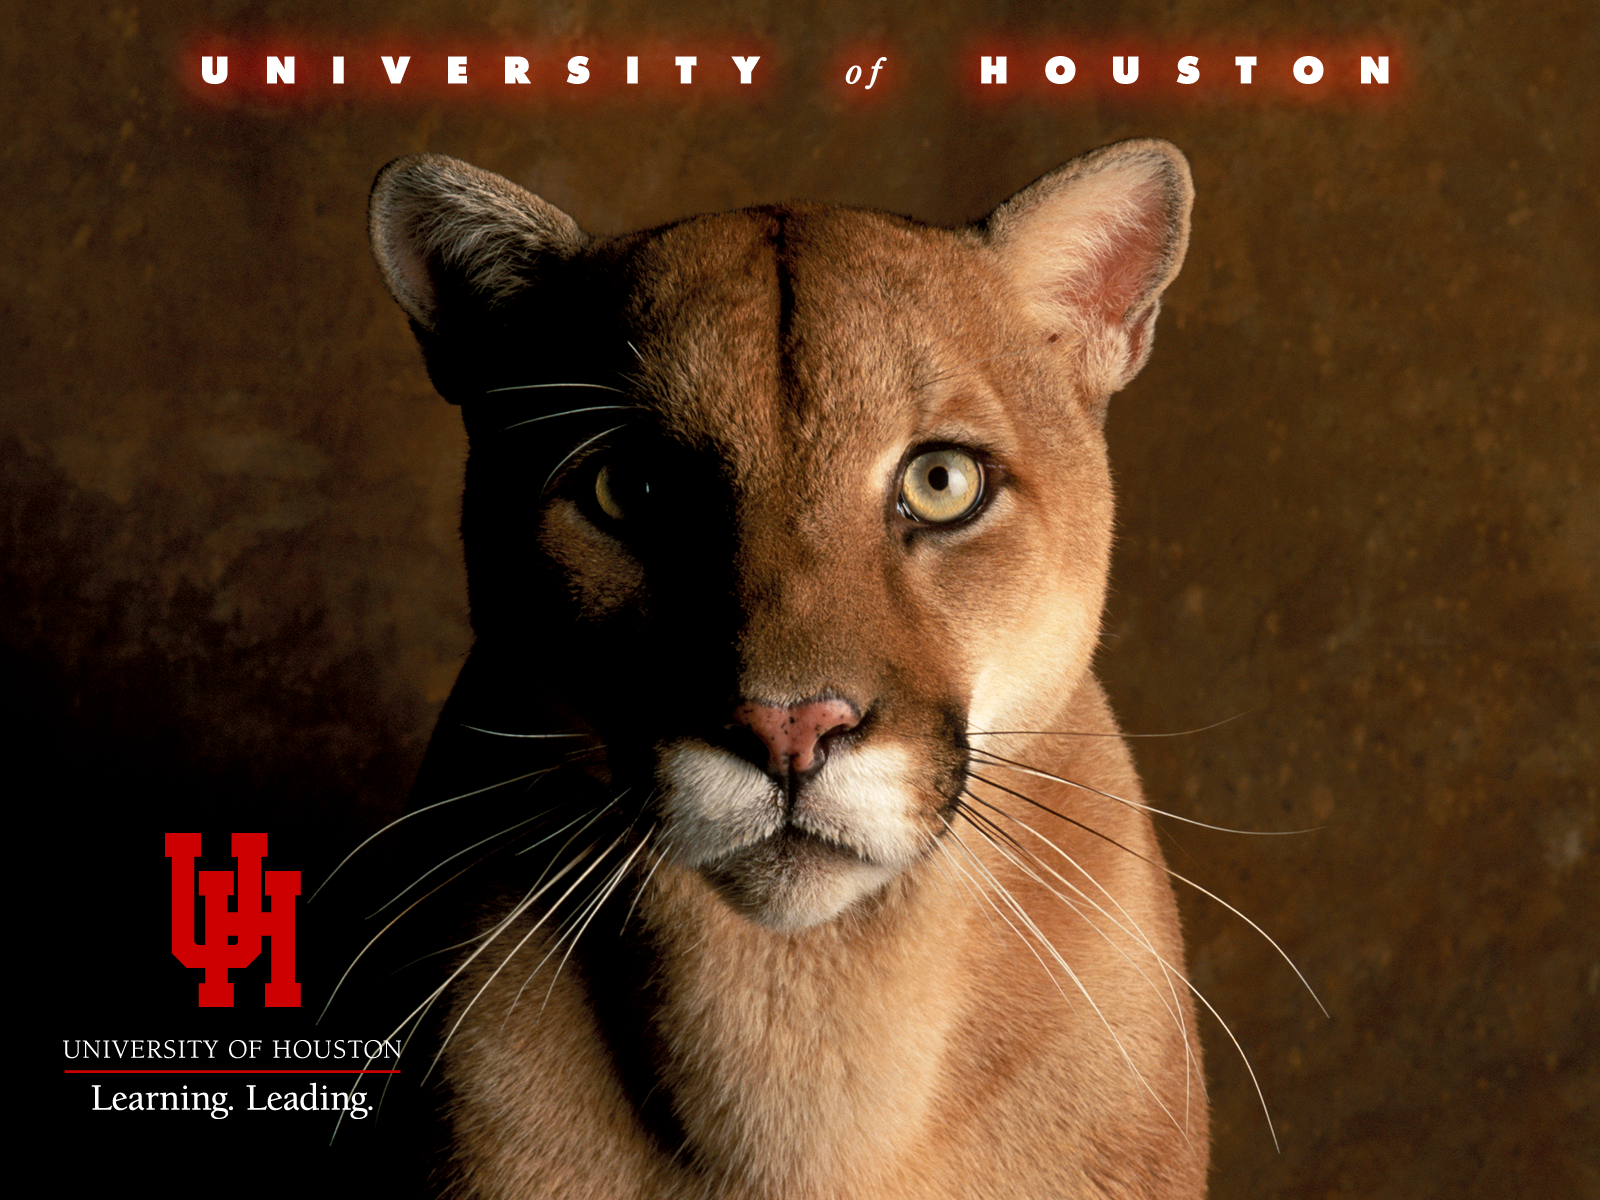 University of Houston - Themes, Screensavers, Desktop Backgrounds